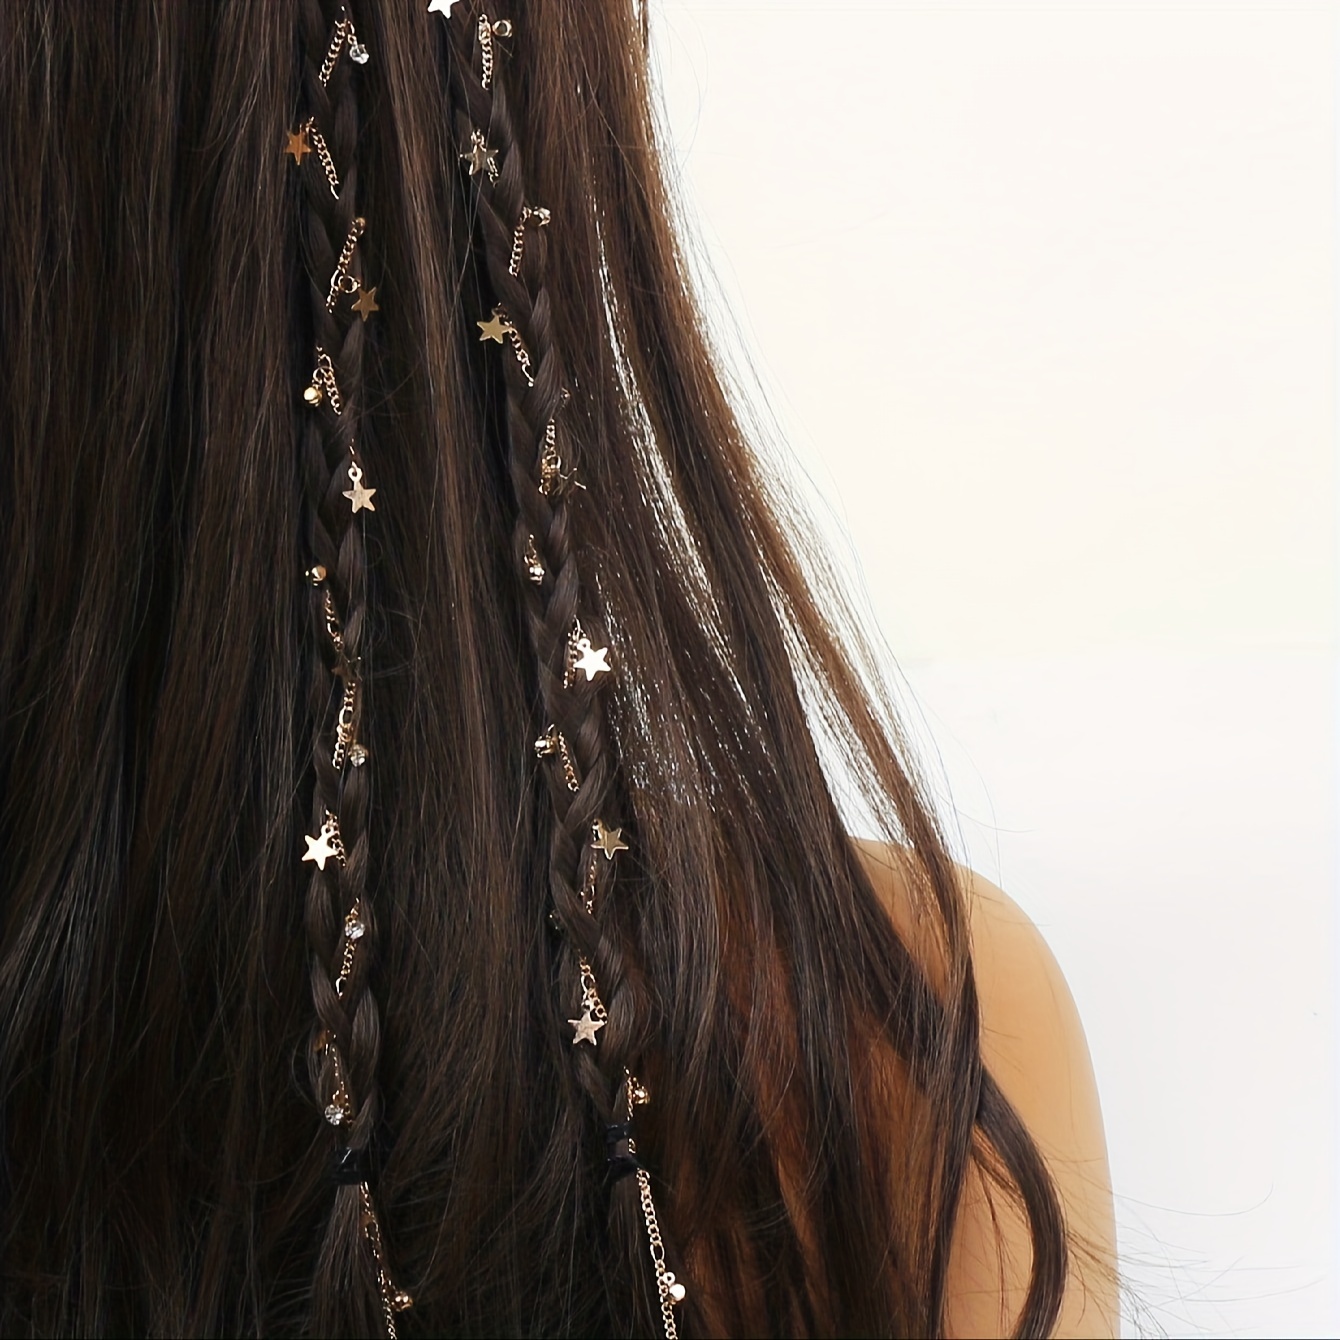 1pc Women Rhinestone Decor Fringe Trim Charm Glamorous Hair Chain